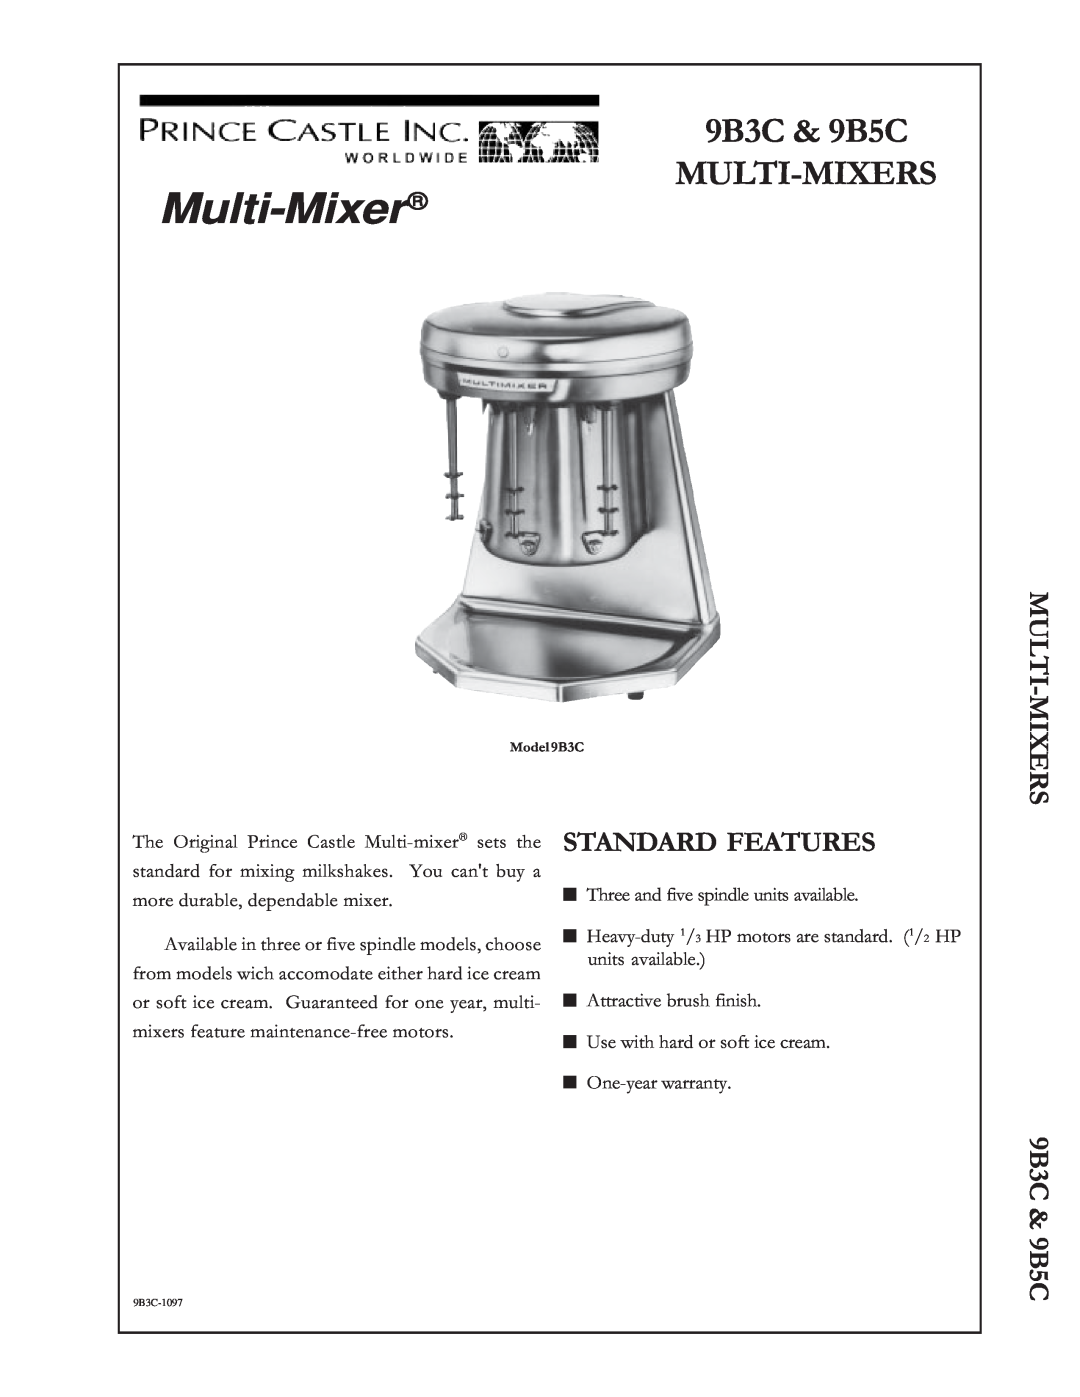 Prince Castle warranty 9B3C & 9B5C MULTI-MIXERS, Multi-Mixers, Standard Features, Multi-Mixerâ 